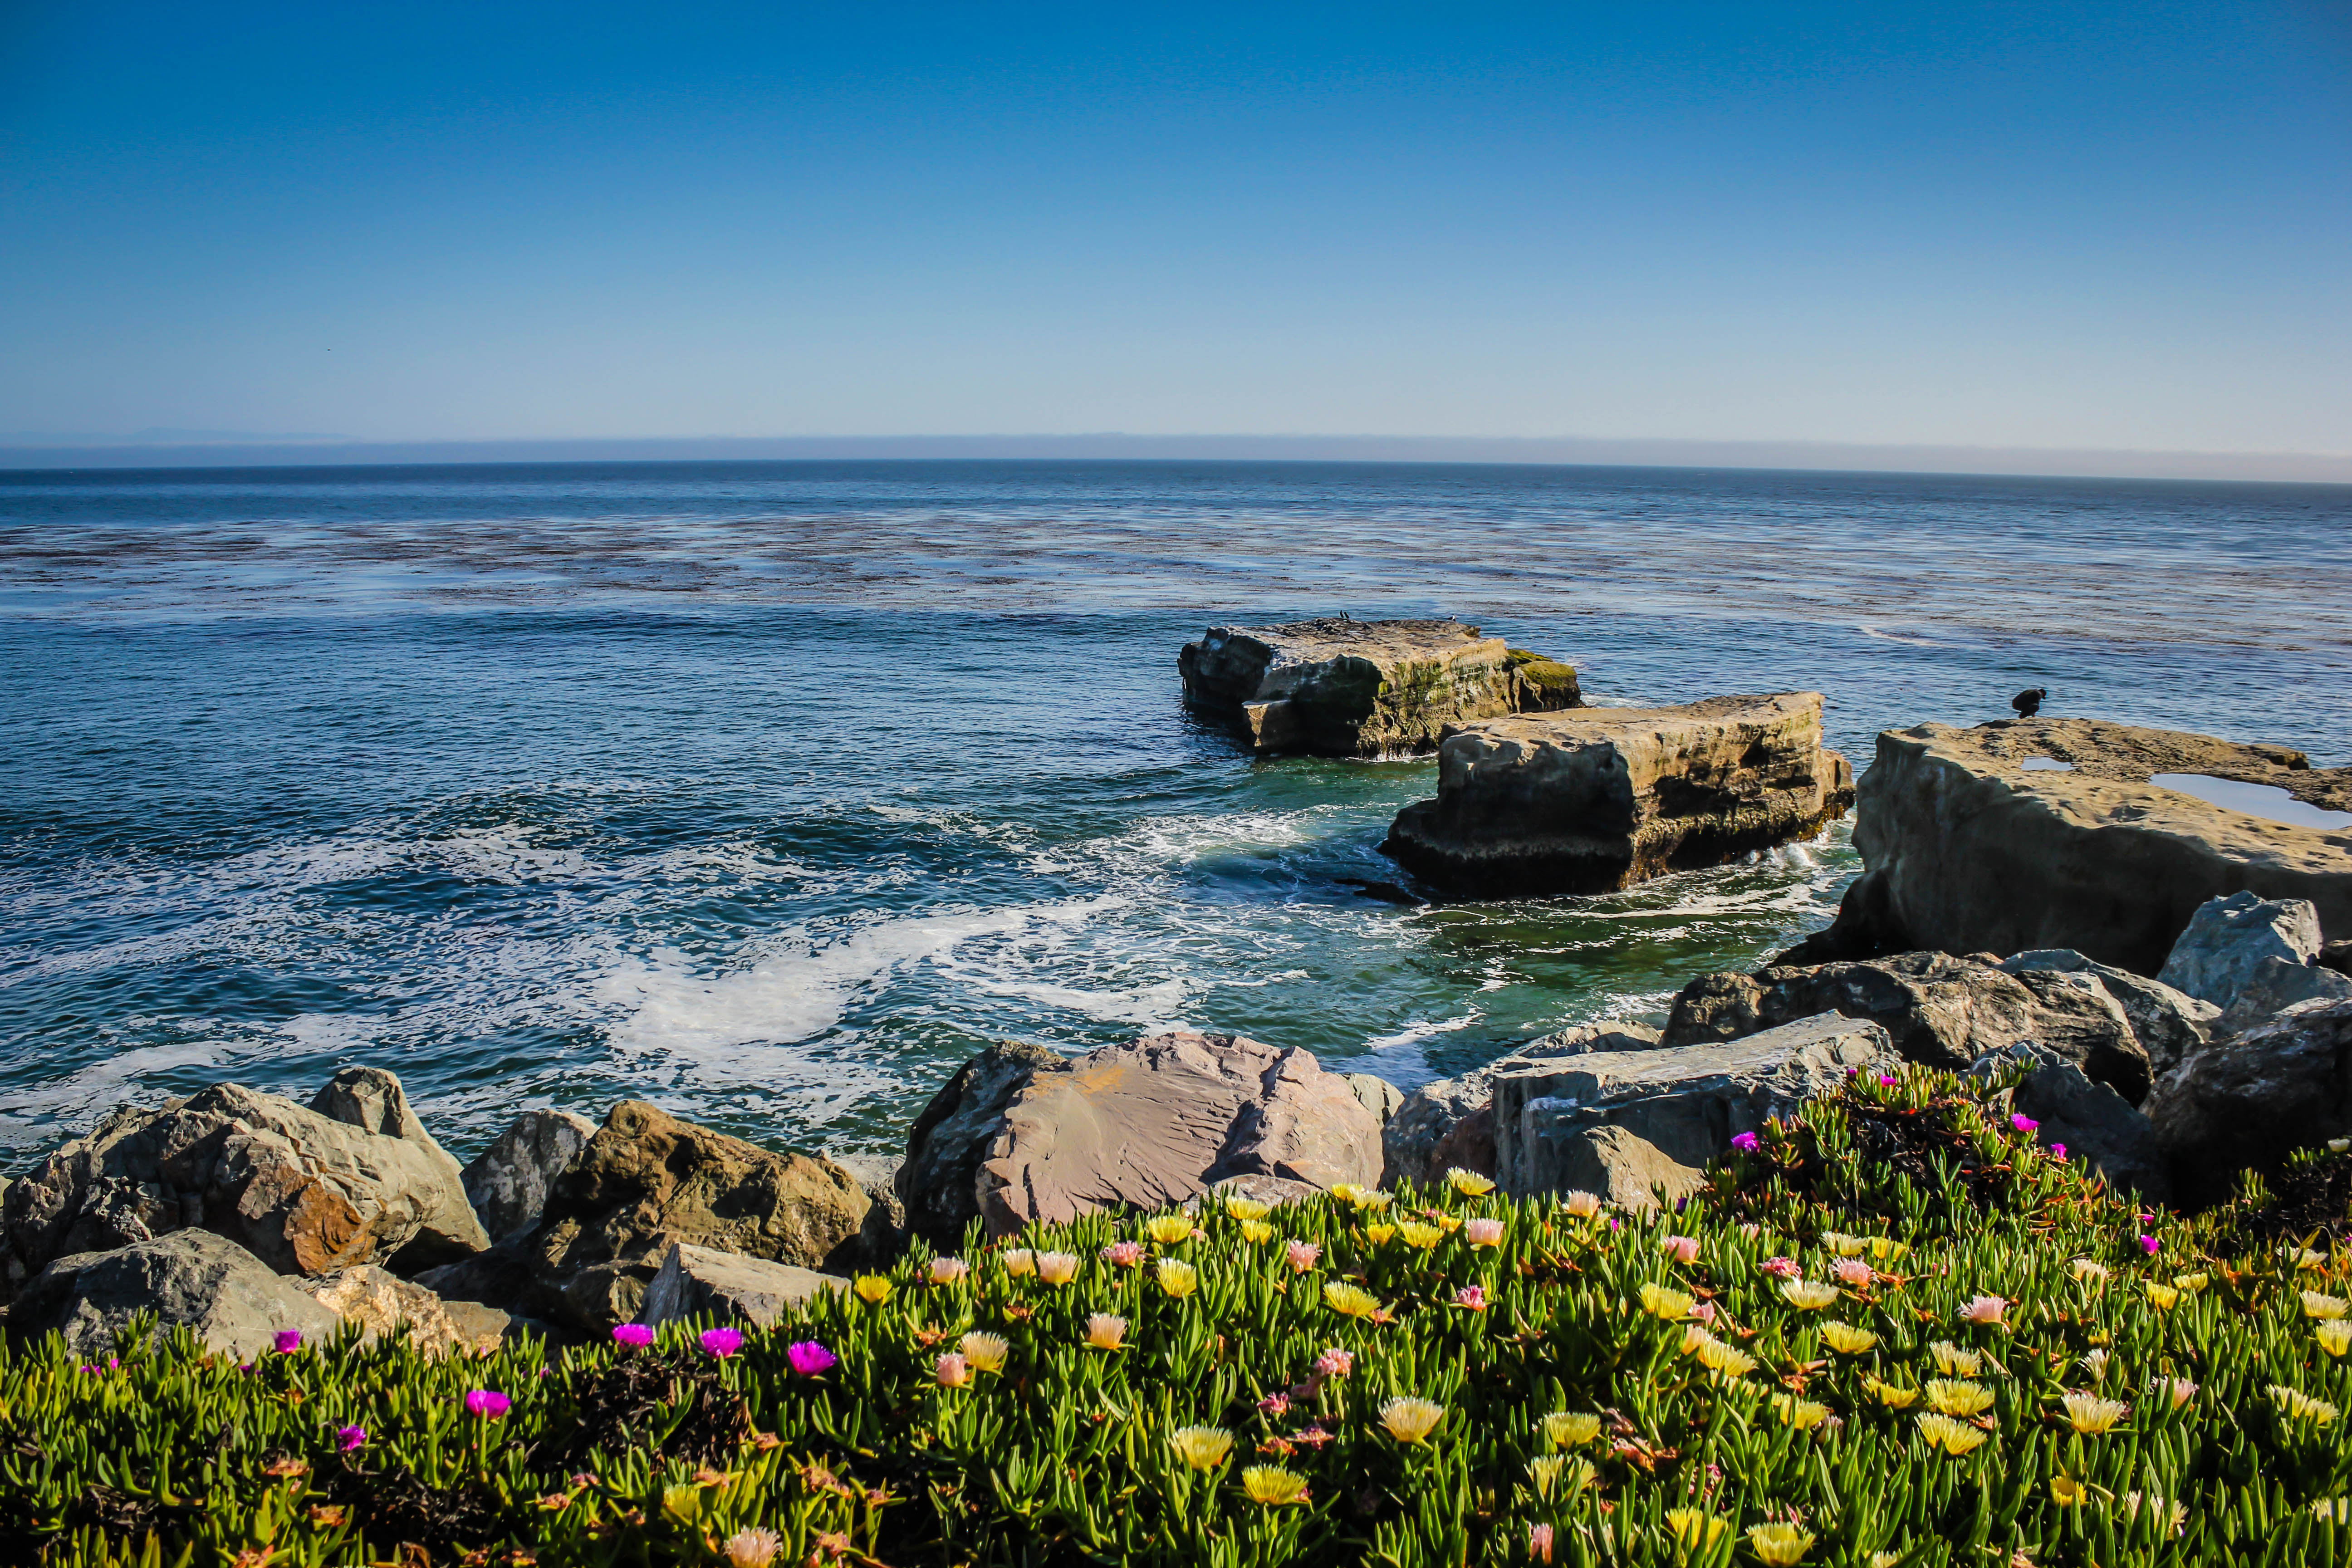 HD wallpaper download The ocean view from Santa Cruz CA Click here